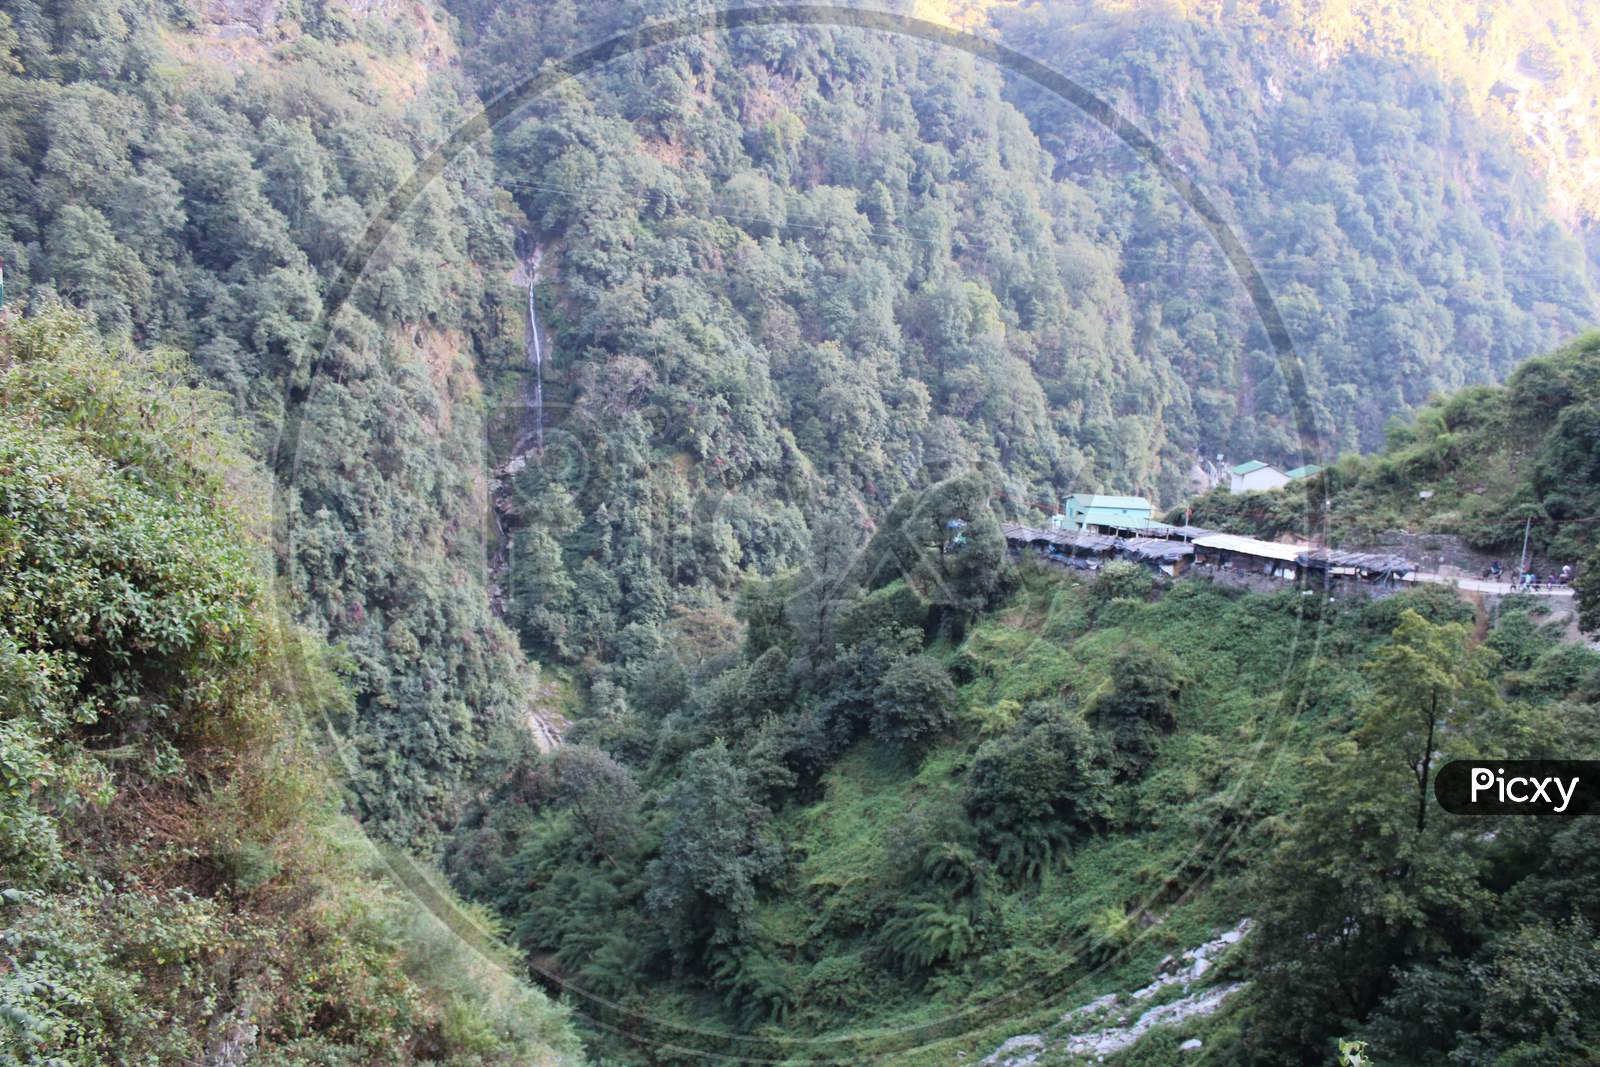 Junglechatti, a starting stop for the Kedarnath yatra